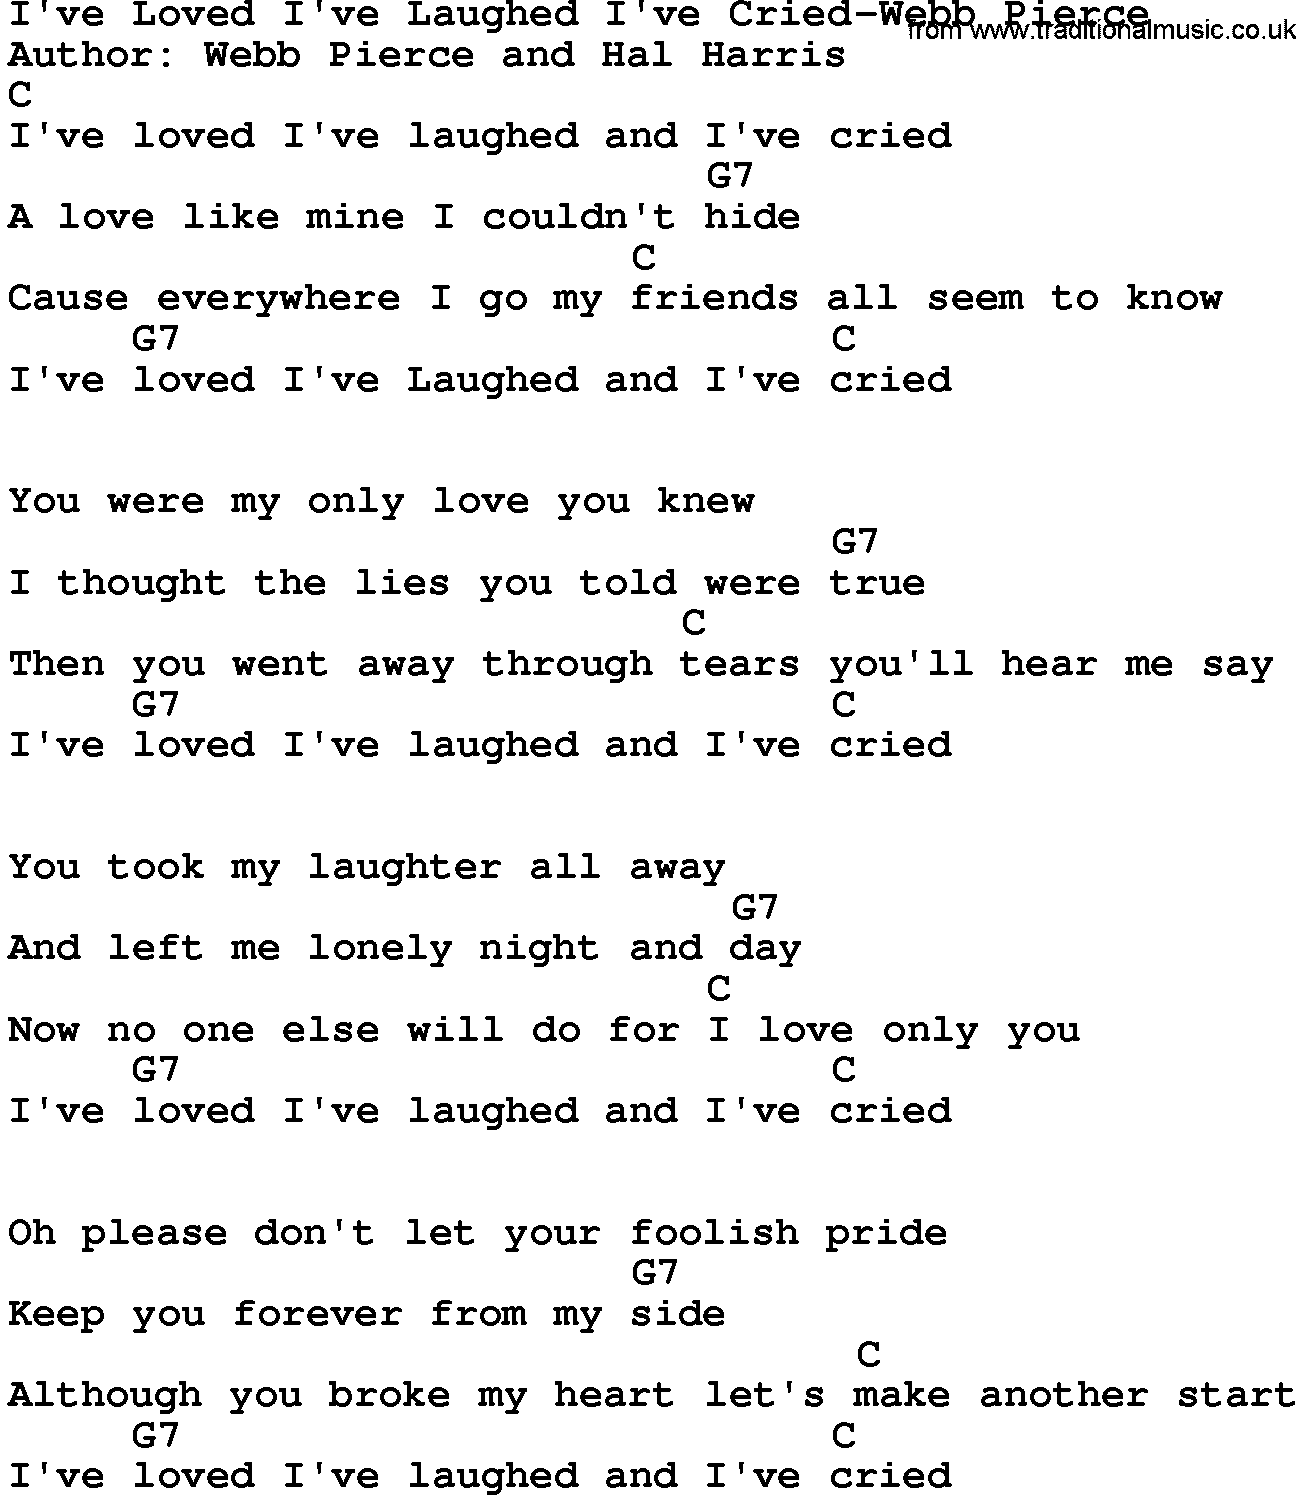 Country music song: I've Loved I've Laughed I've Cried-Webb Pierce lyrics and chords